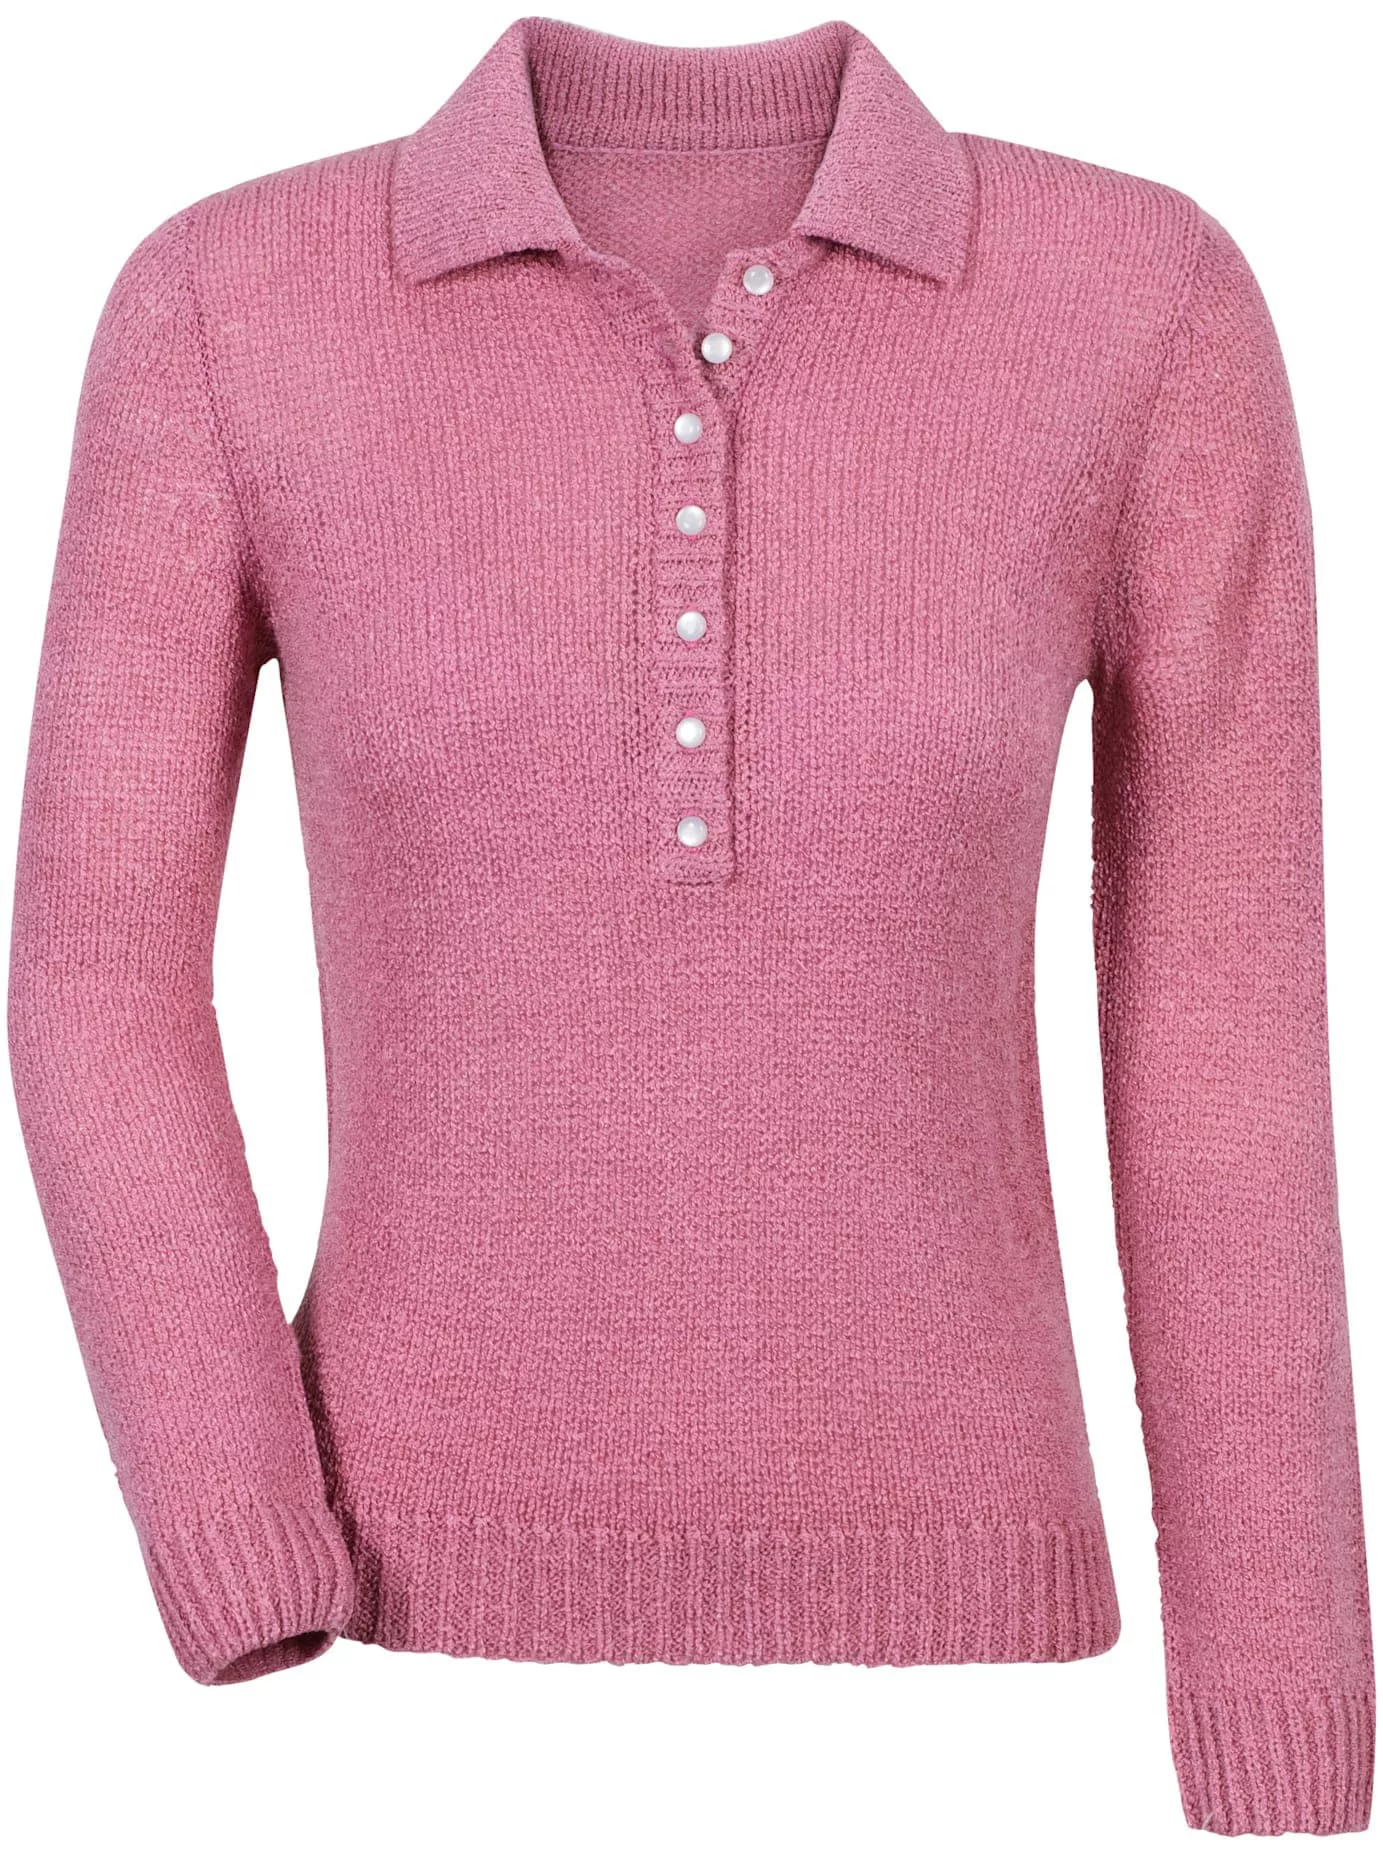 Classic Basics Polokragenpullover "Pullover" günstig online kaufen